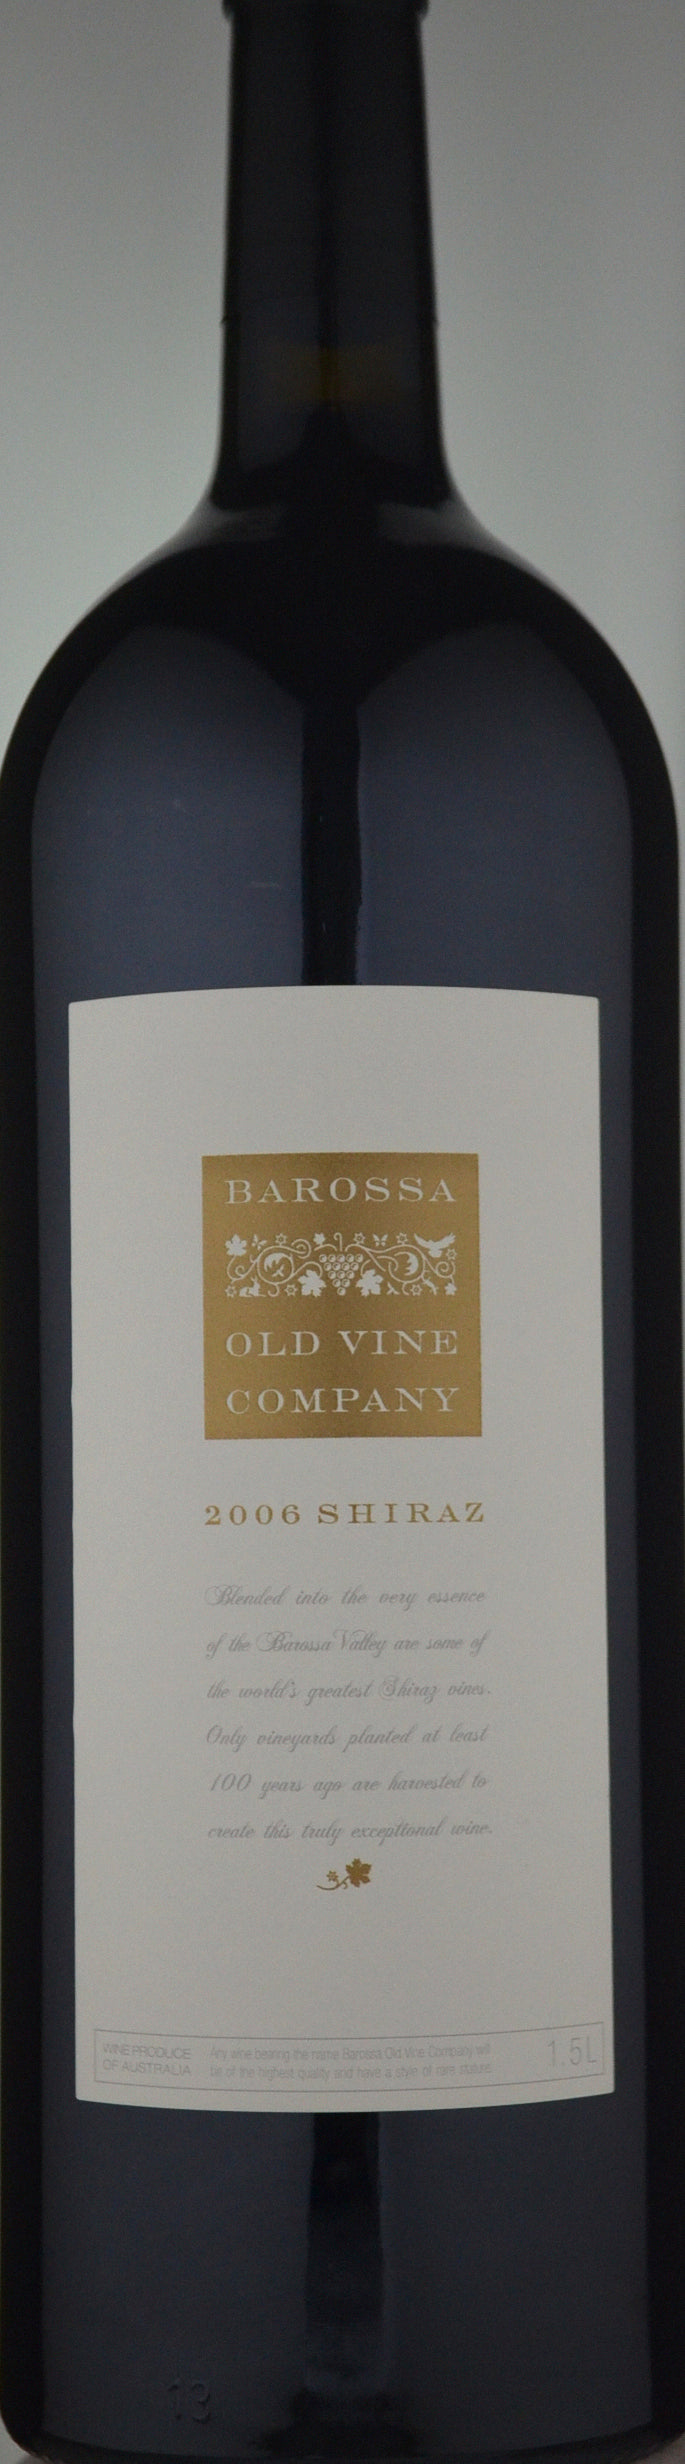 Barossa Old Vine Company Shiraz 2006